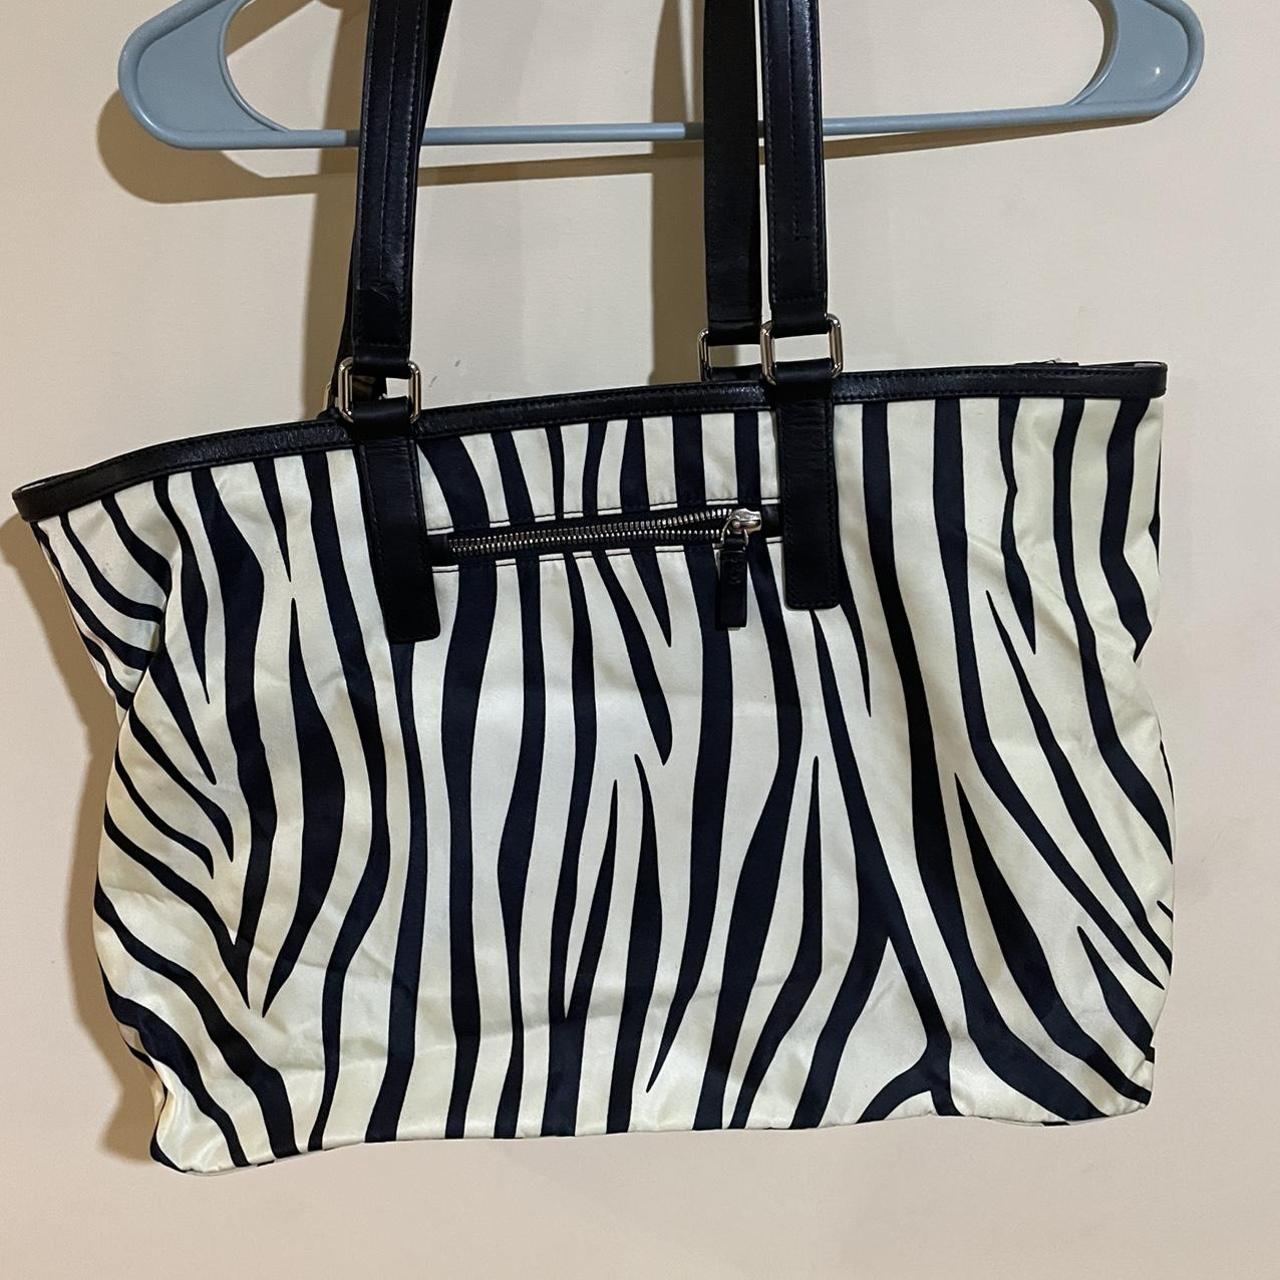 Product Image 3 - zebra print tumi purse nice